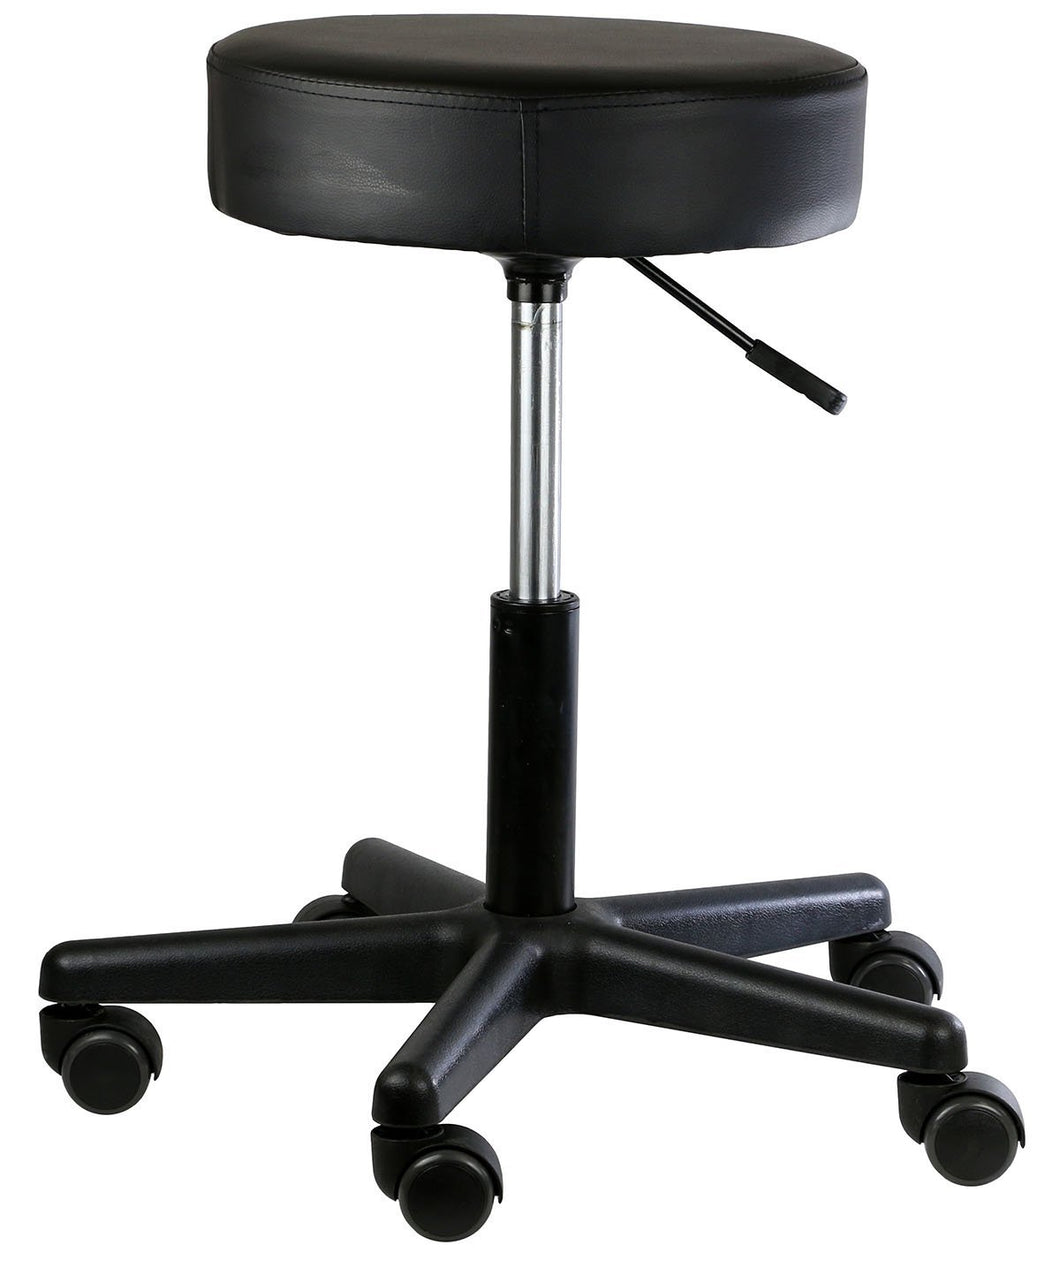 Pneumatic mobile stool, no back, 18